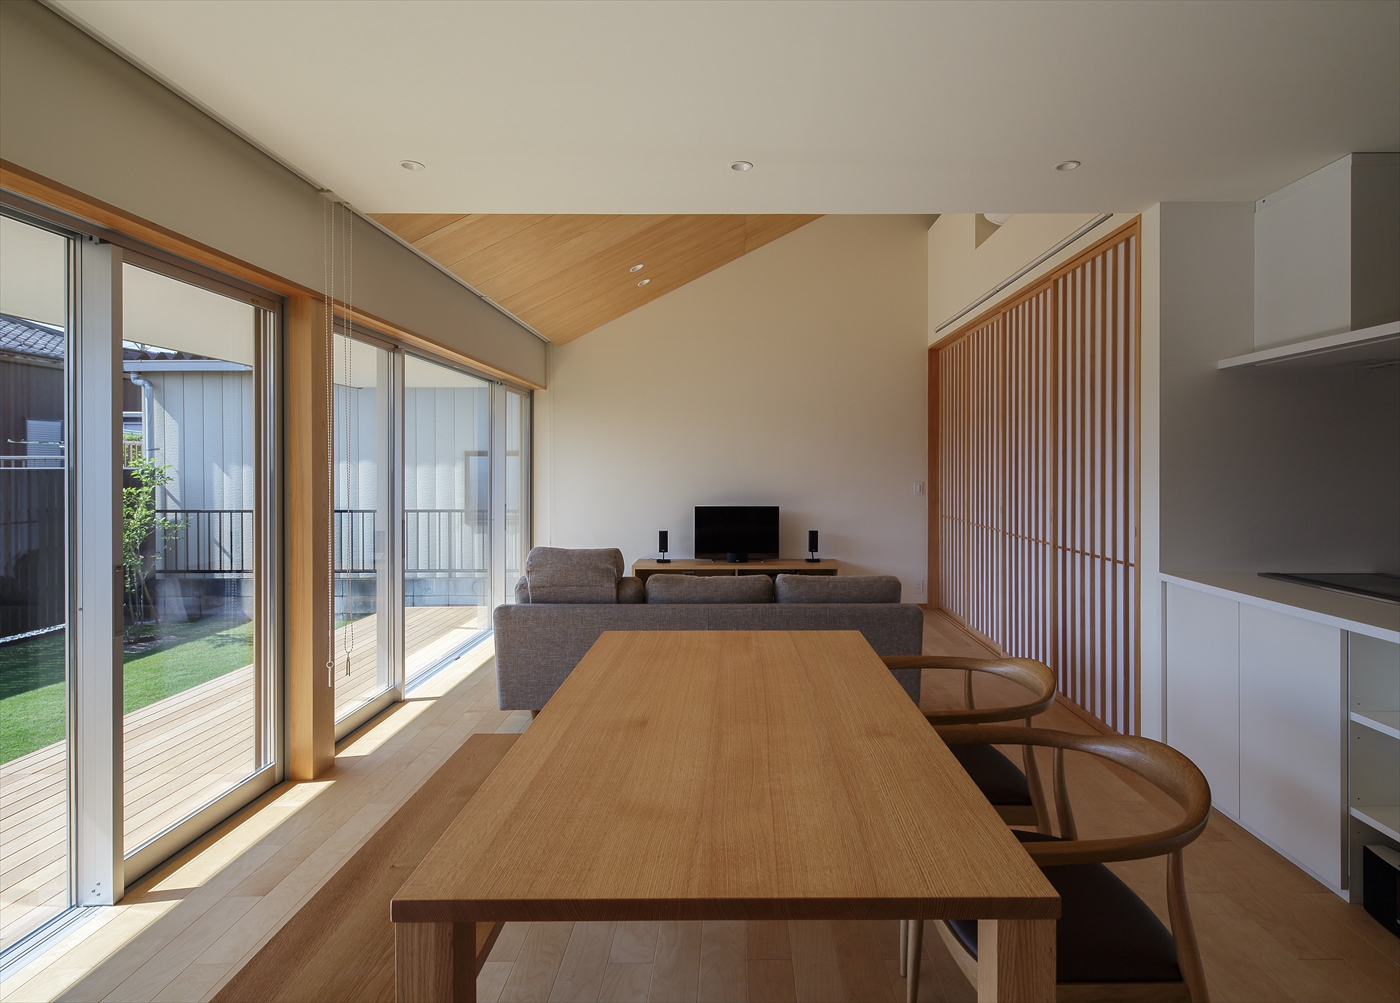 Architecture: House Yorii located in Saitama Prefecture, Japan